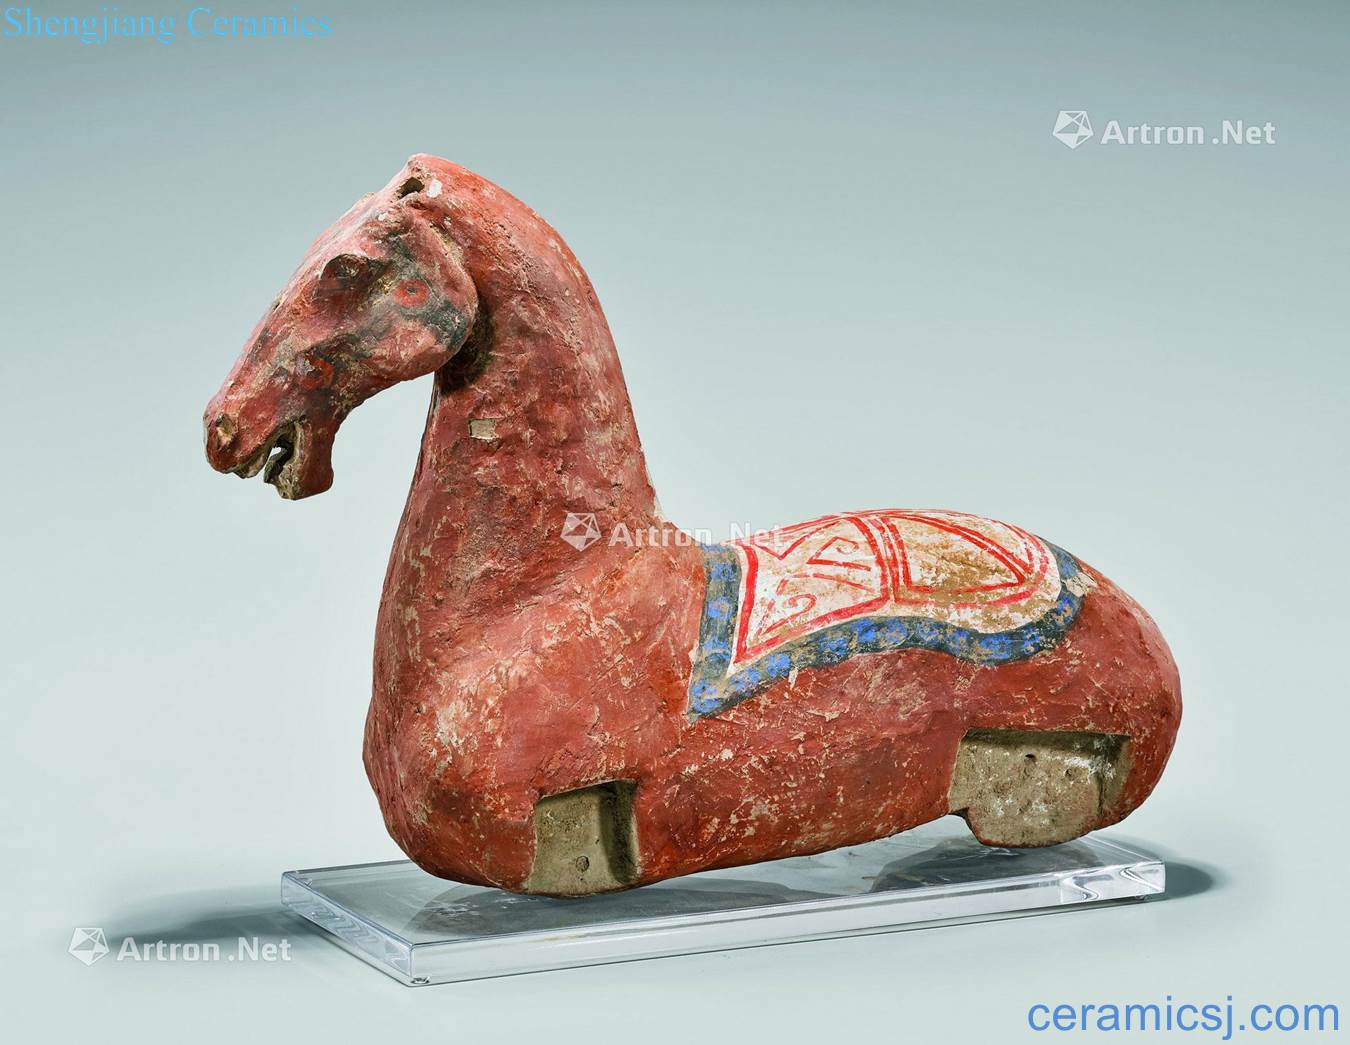 The han dynasty pottery horse